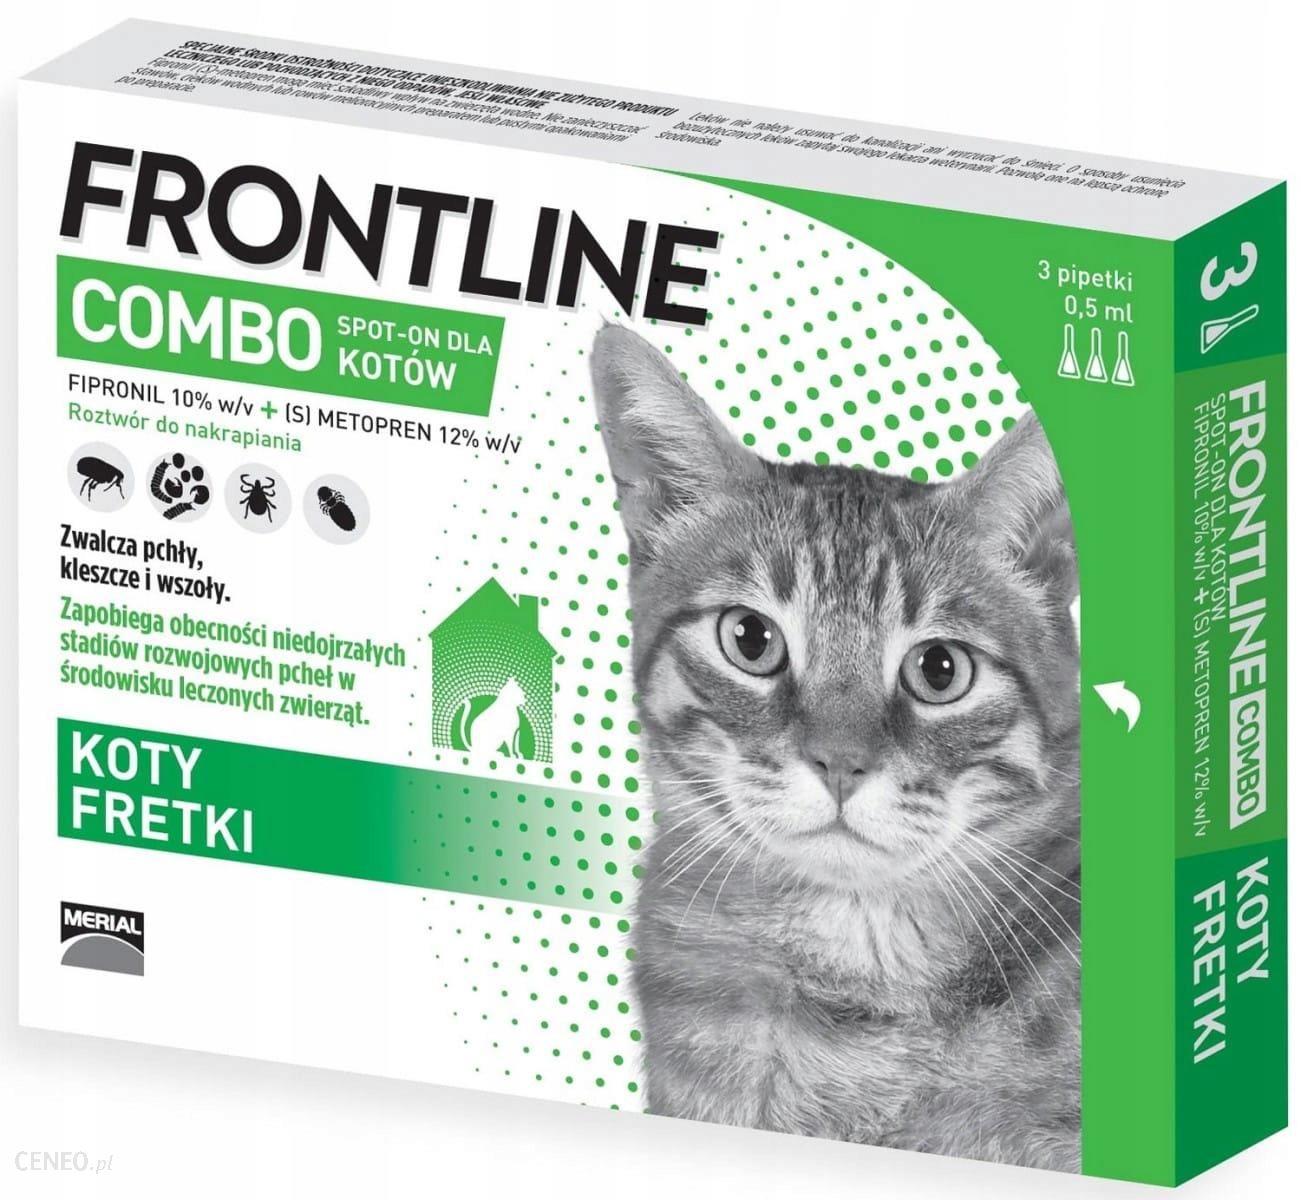 Frontline Combo Spot-On Dla Kotów Pipeta 0